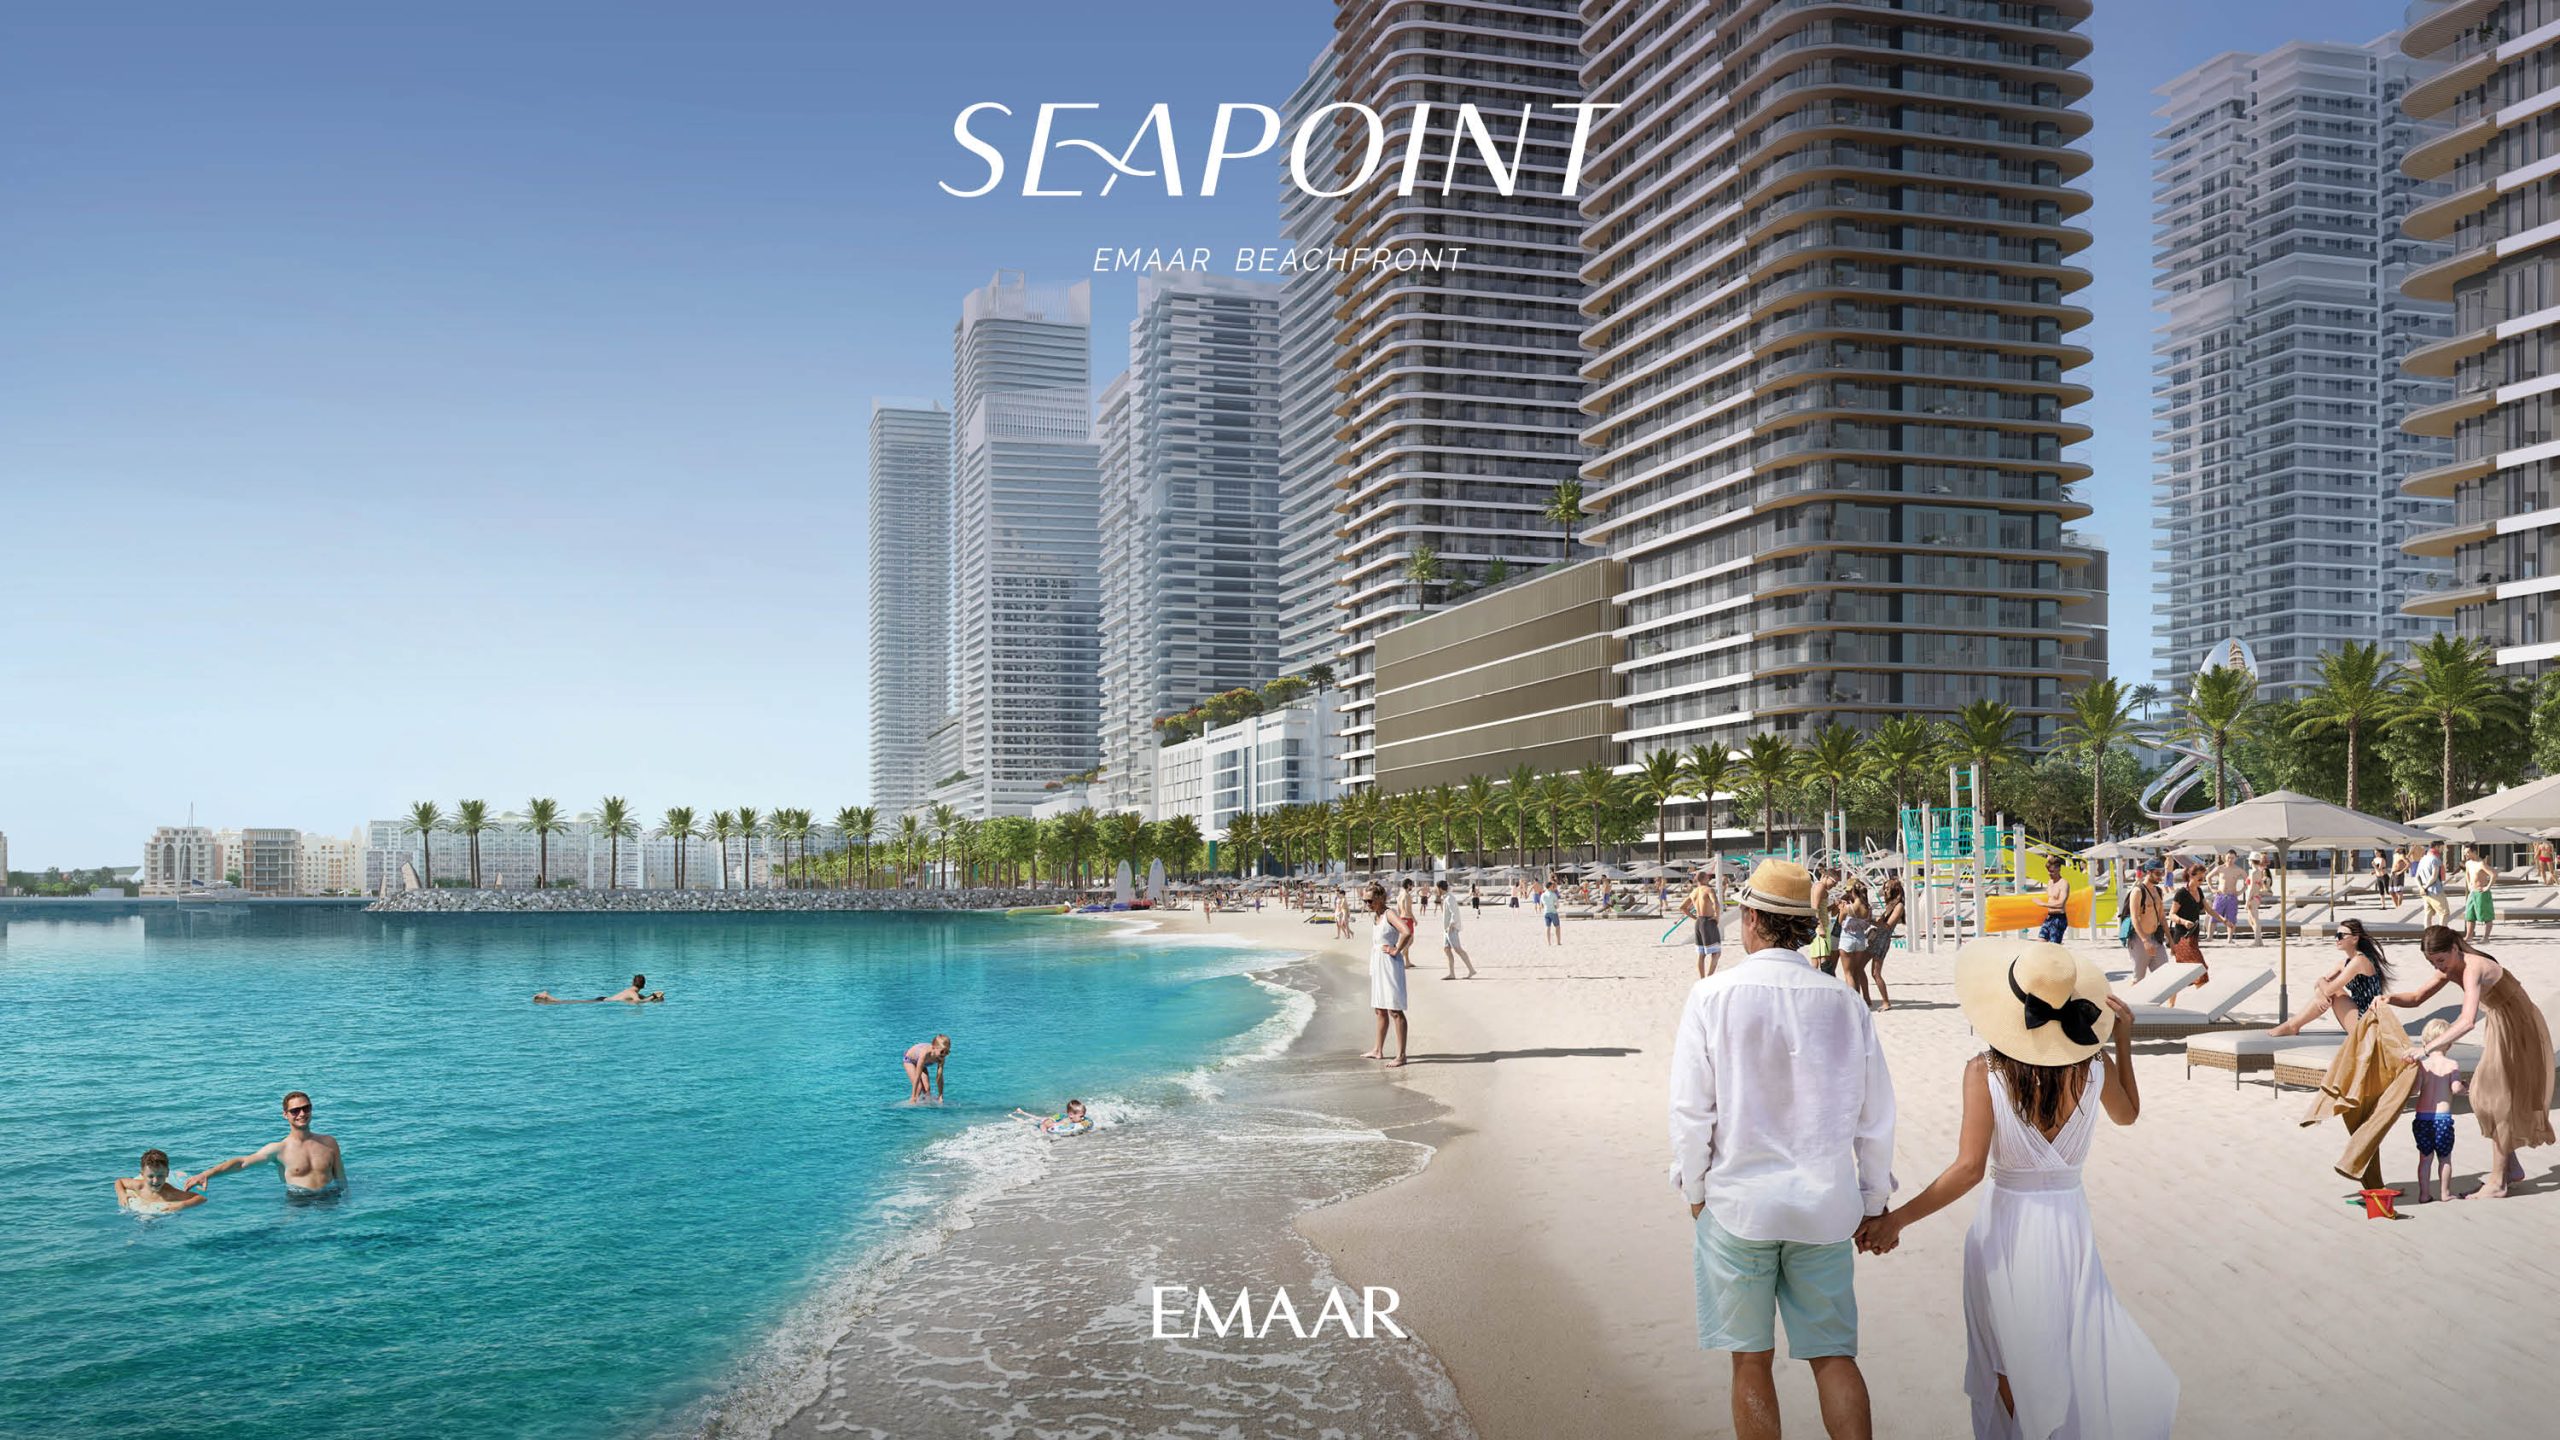 Seapoint by Emaar at Emaar Beachfront, Dubai